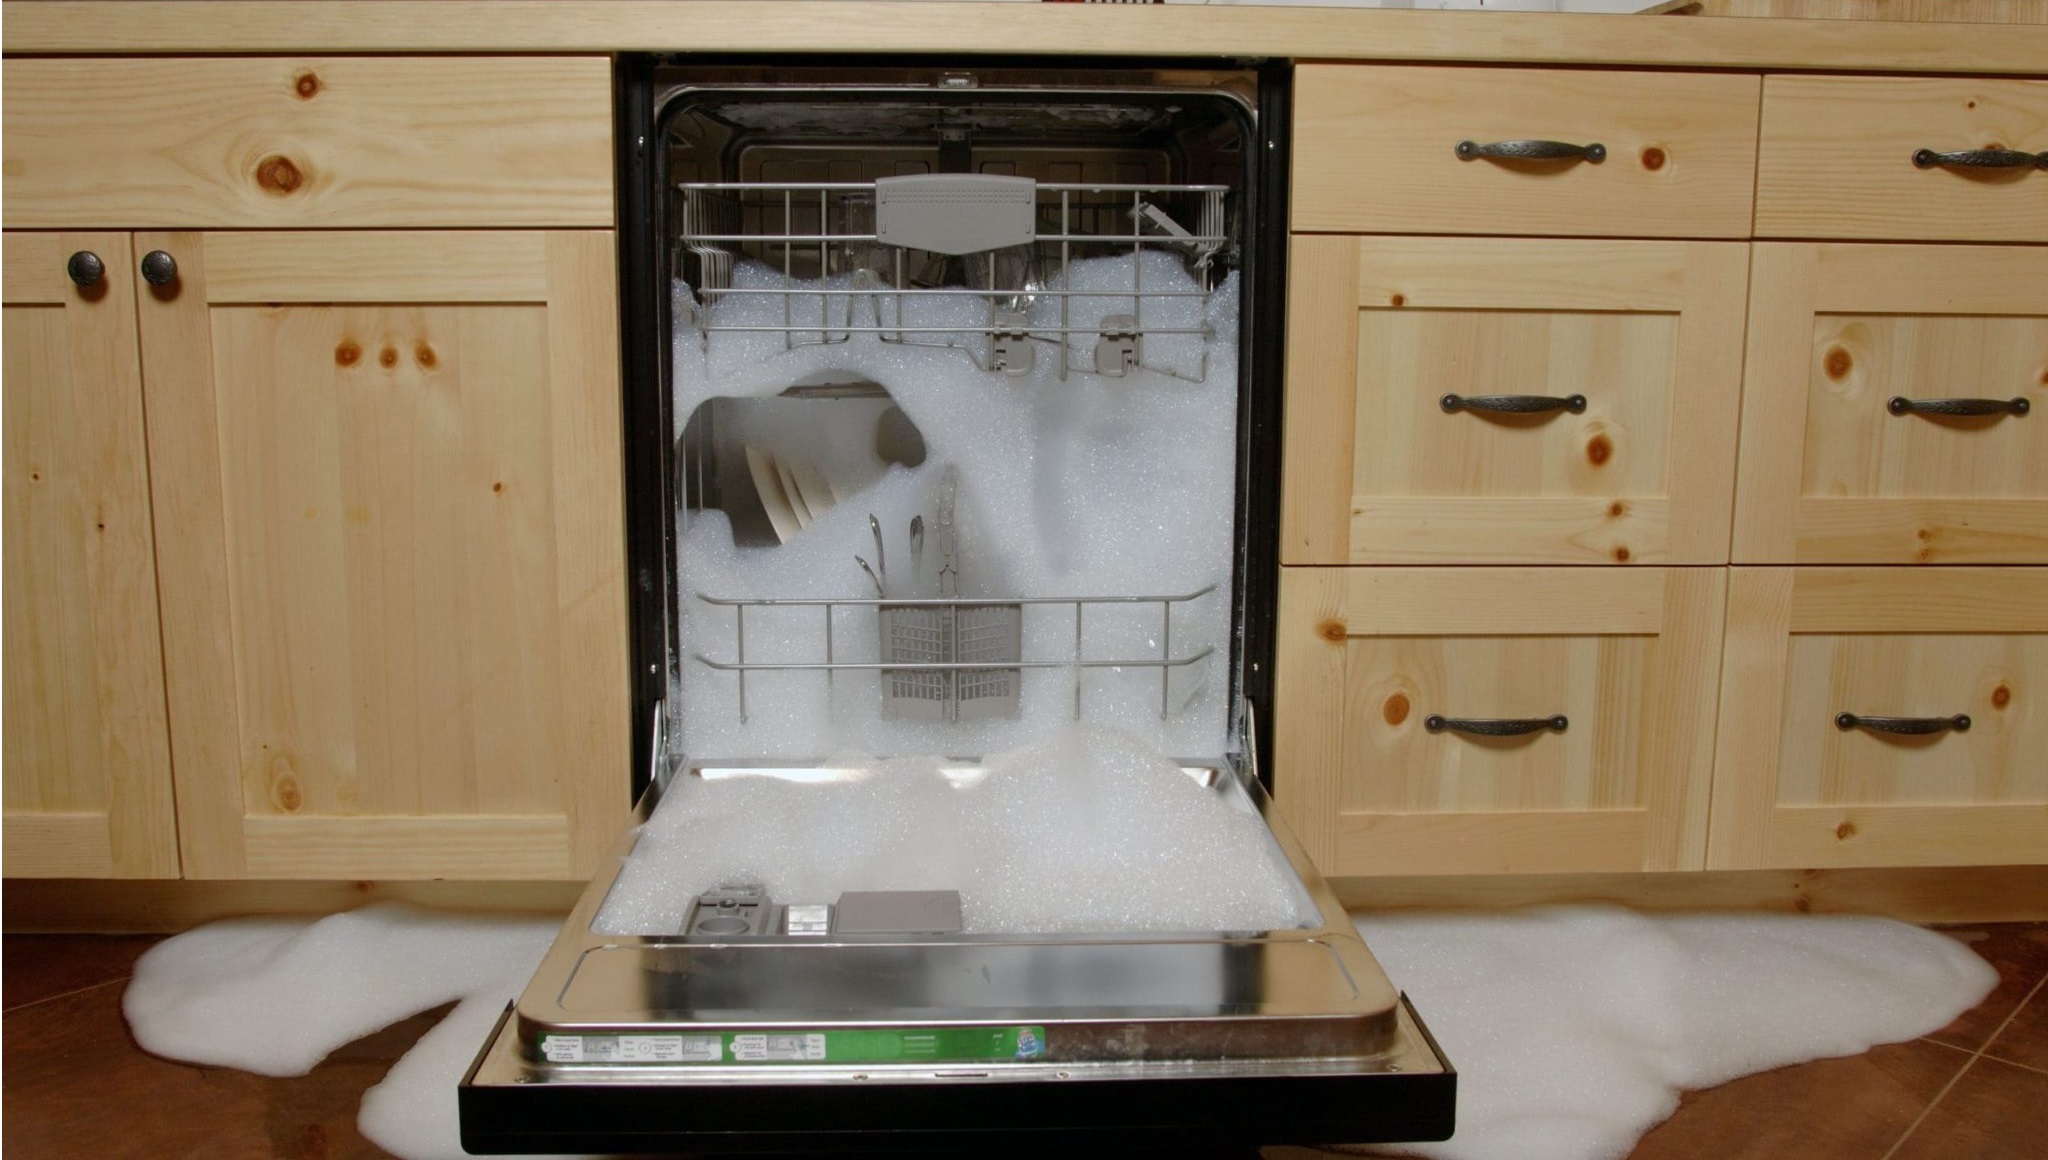 what happens if you open the dishwasher door